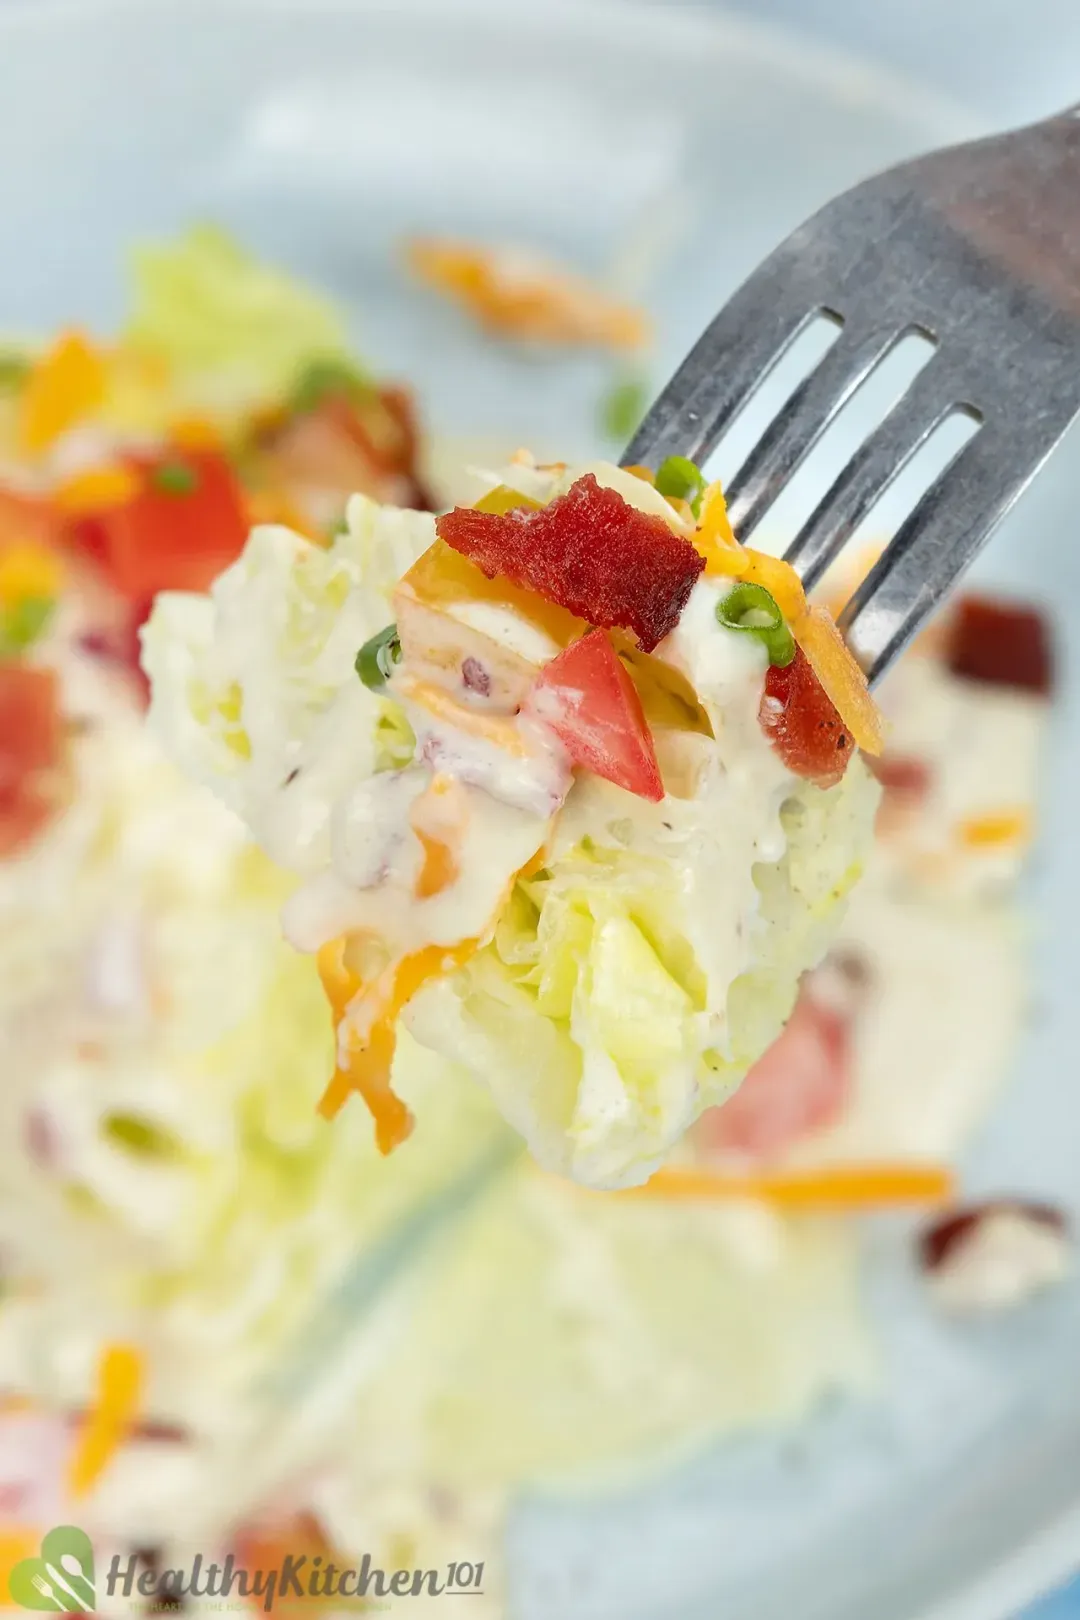 Is Wedge Salad Healthy